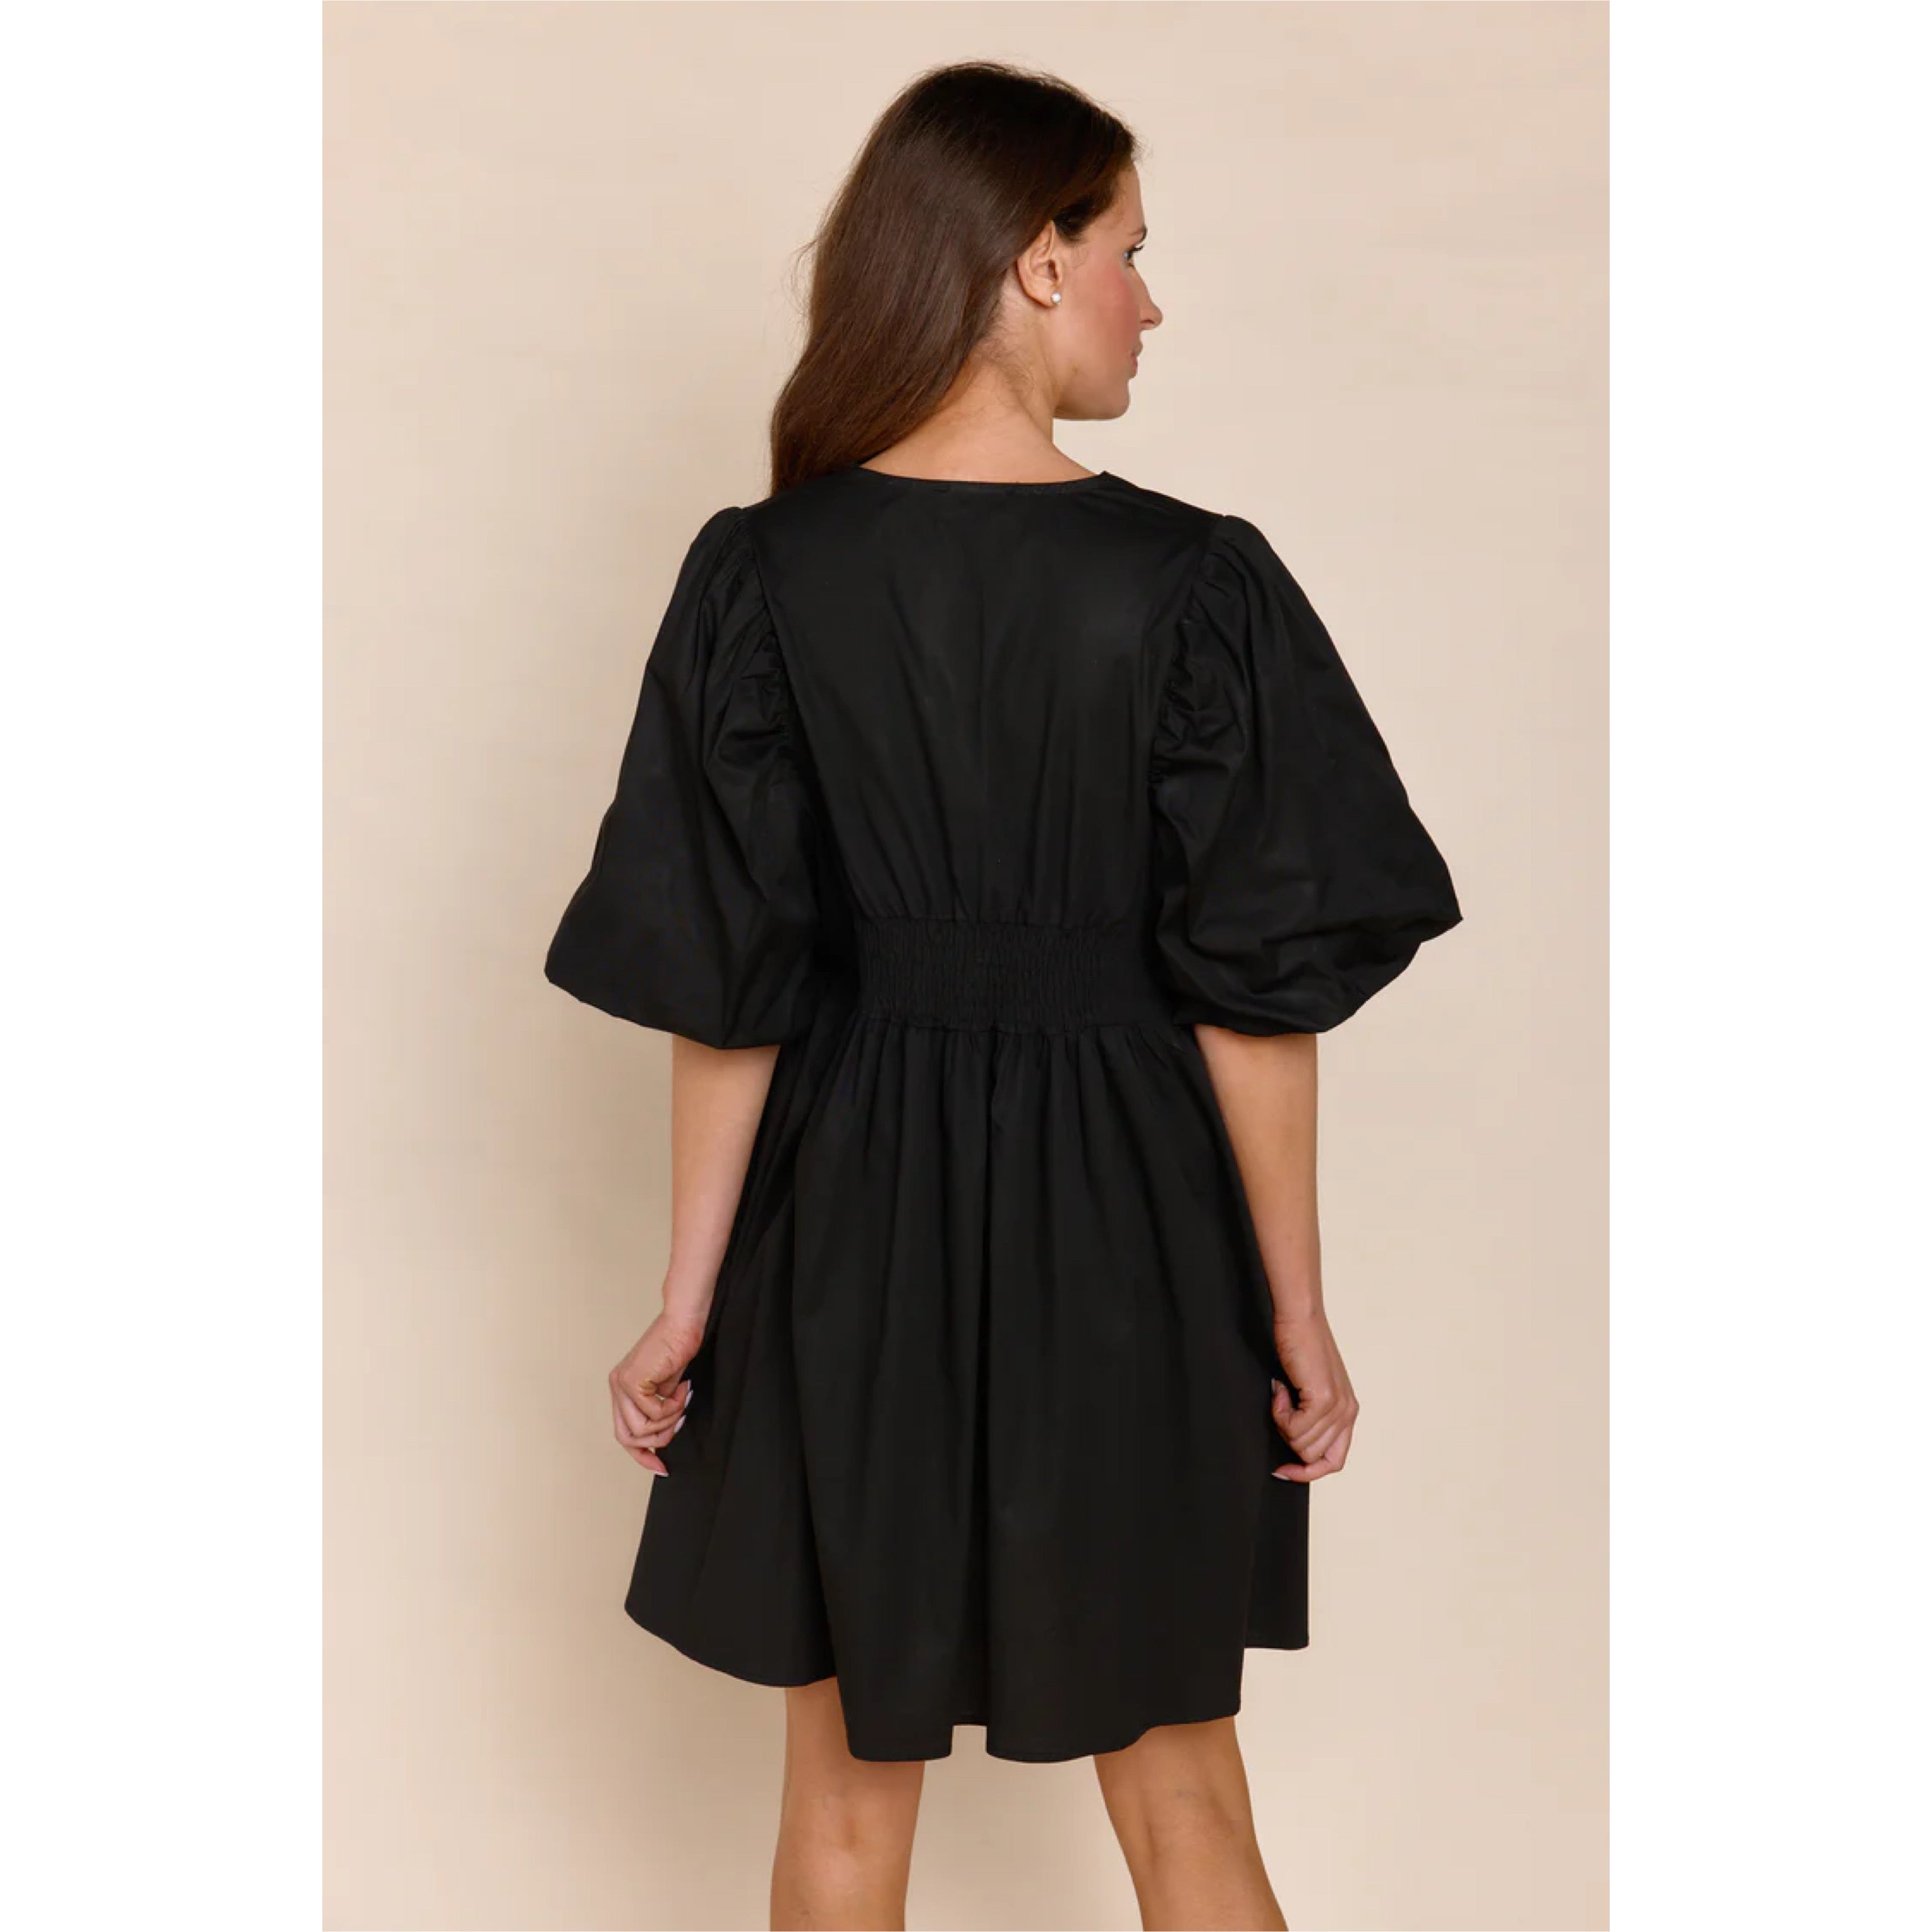 Sofia black puff-sleeve dress, size S